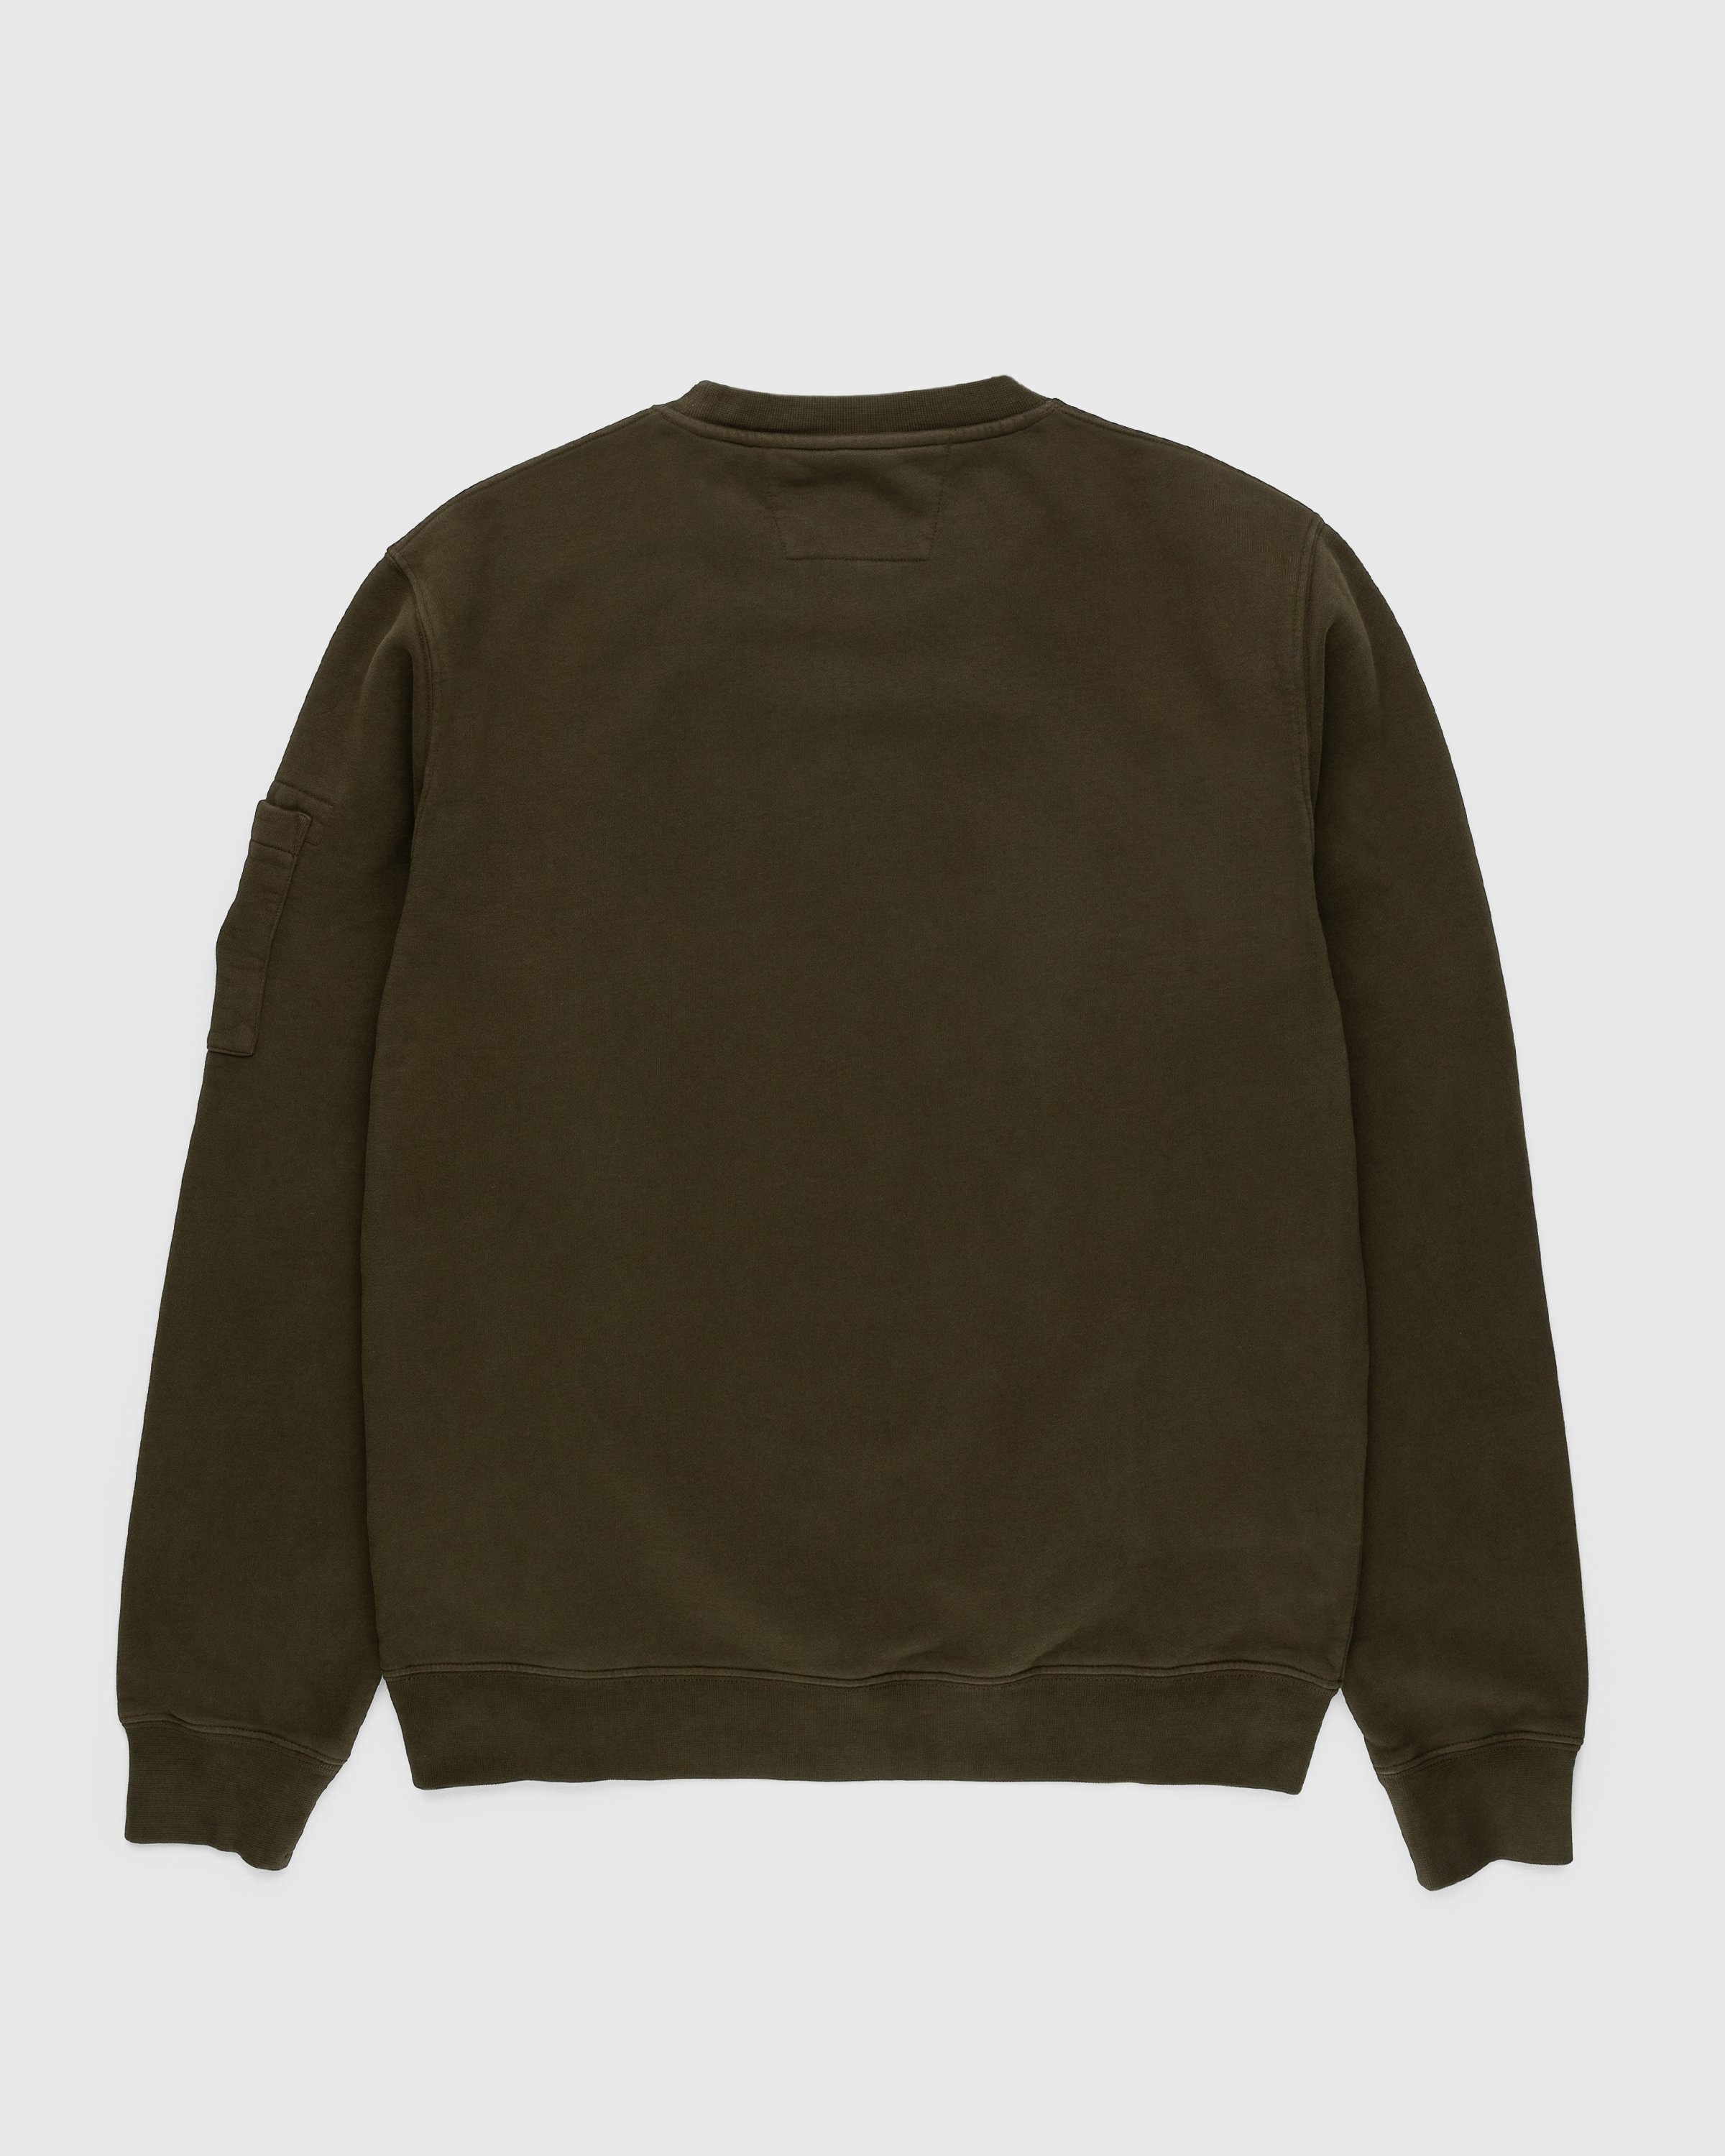 C.P. Company – Diagonal Raised Fleece Crewneck Sweatshirt Ivy Green - Sweats - Green - Image 2